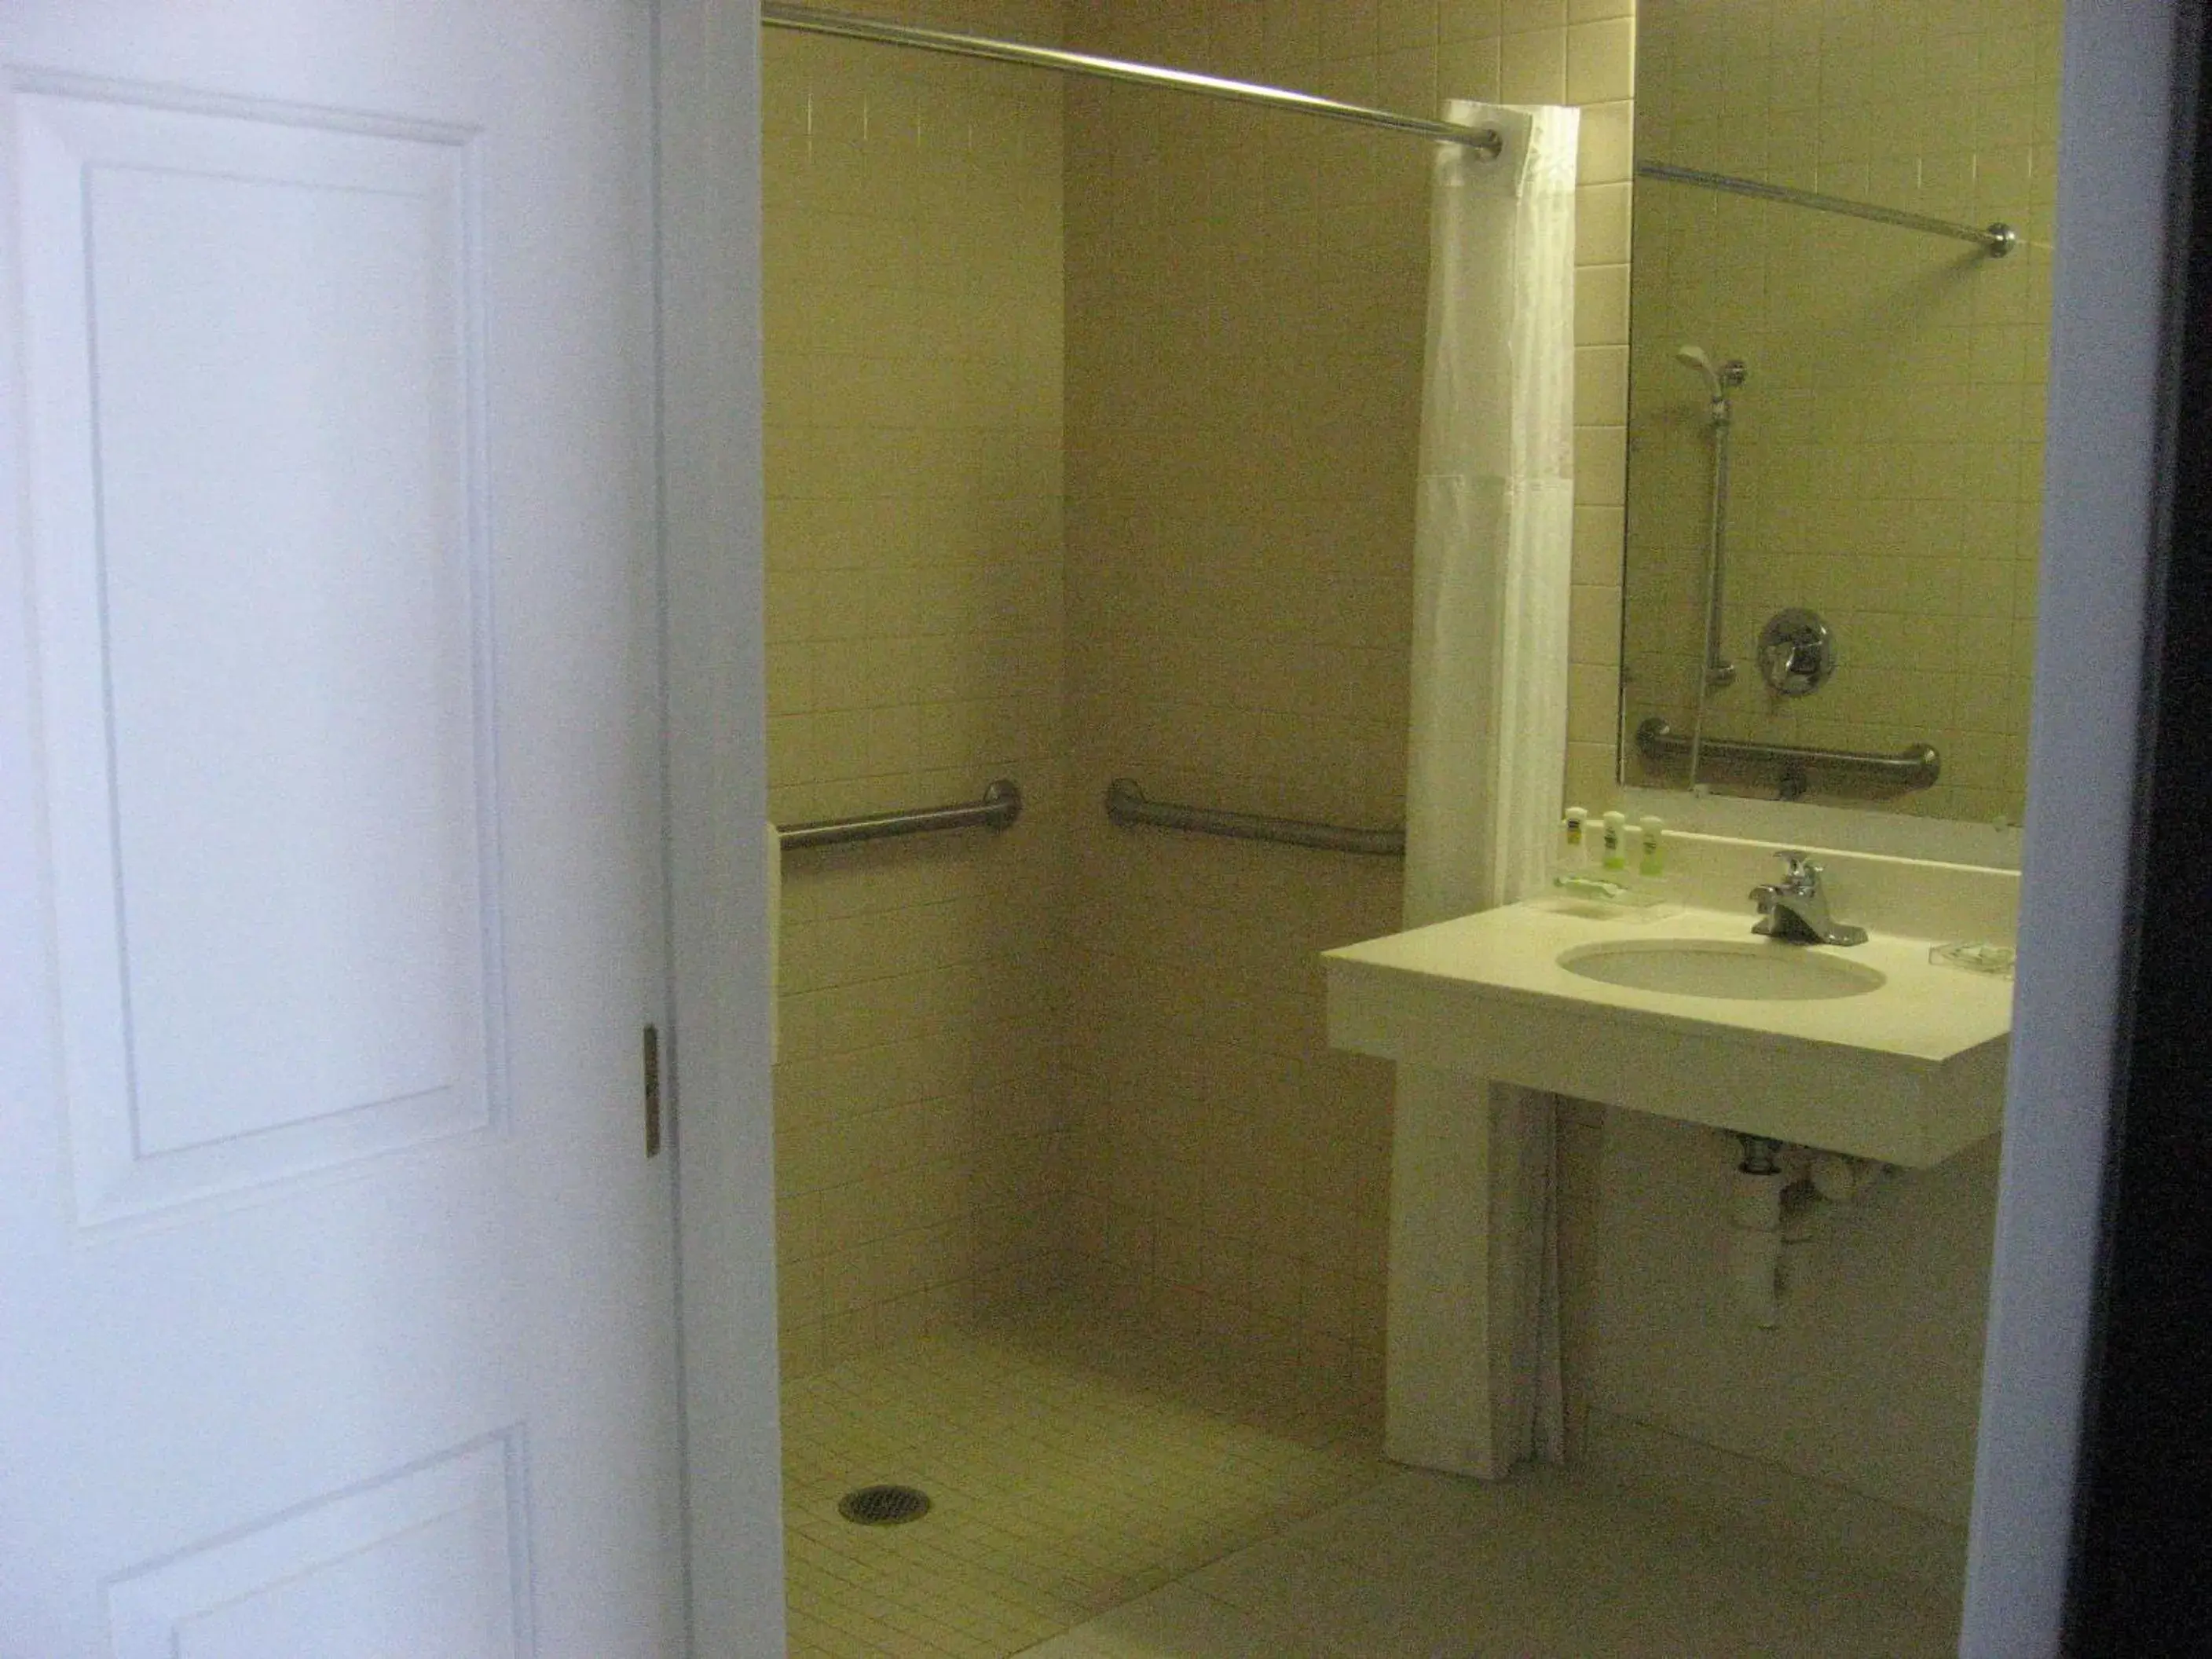 Bathroom in Country Inn & Suites by Radisson, Wausau, WI